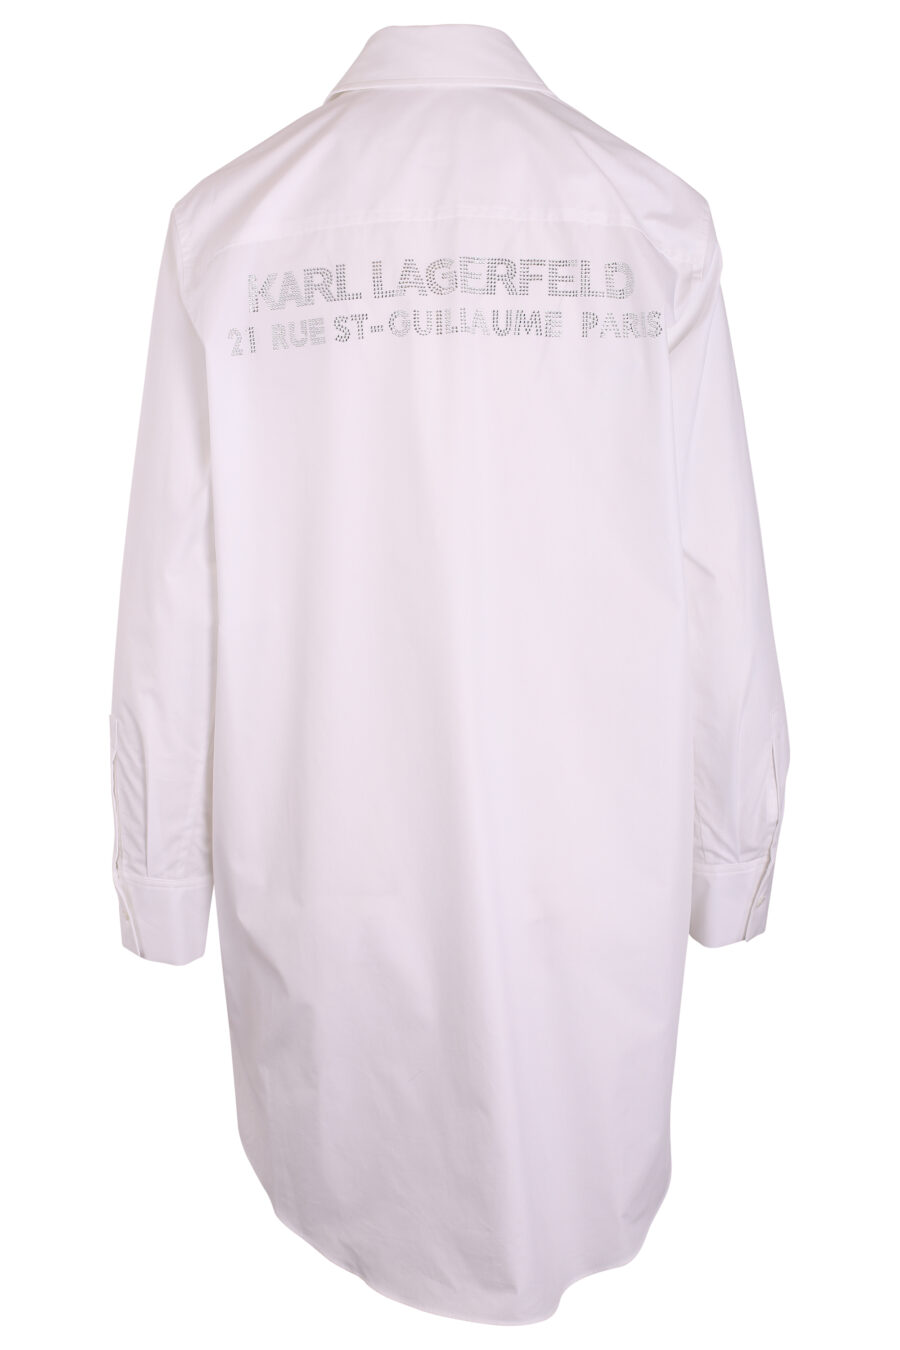 Camisa blanca larga con logo strass - IMG 3424